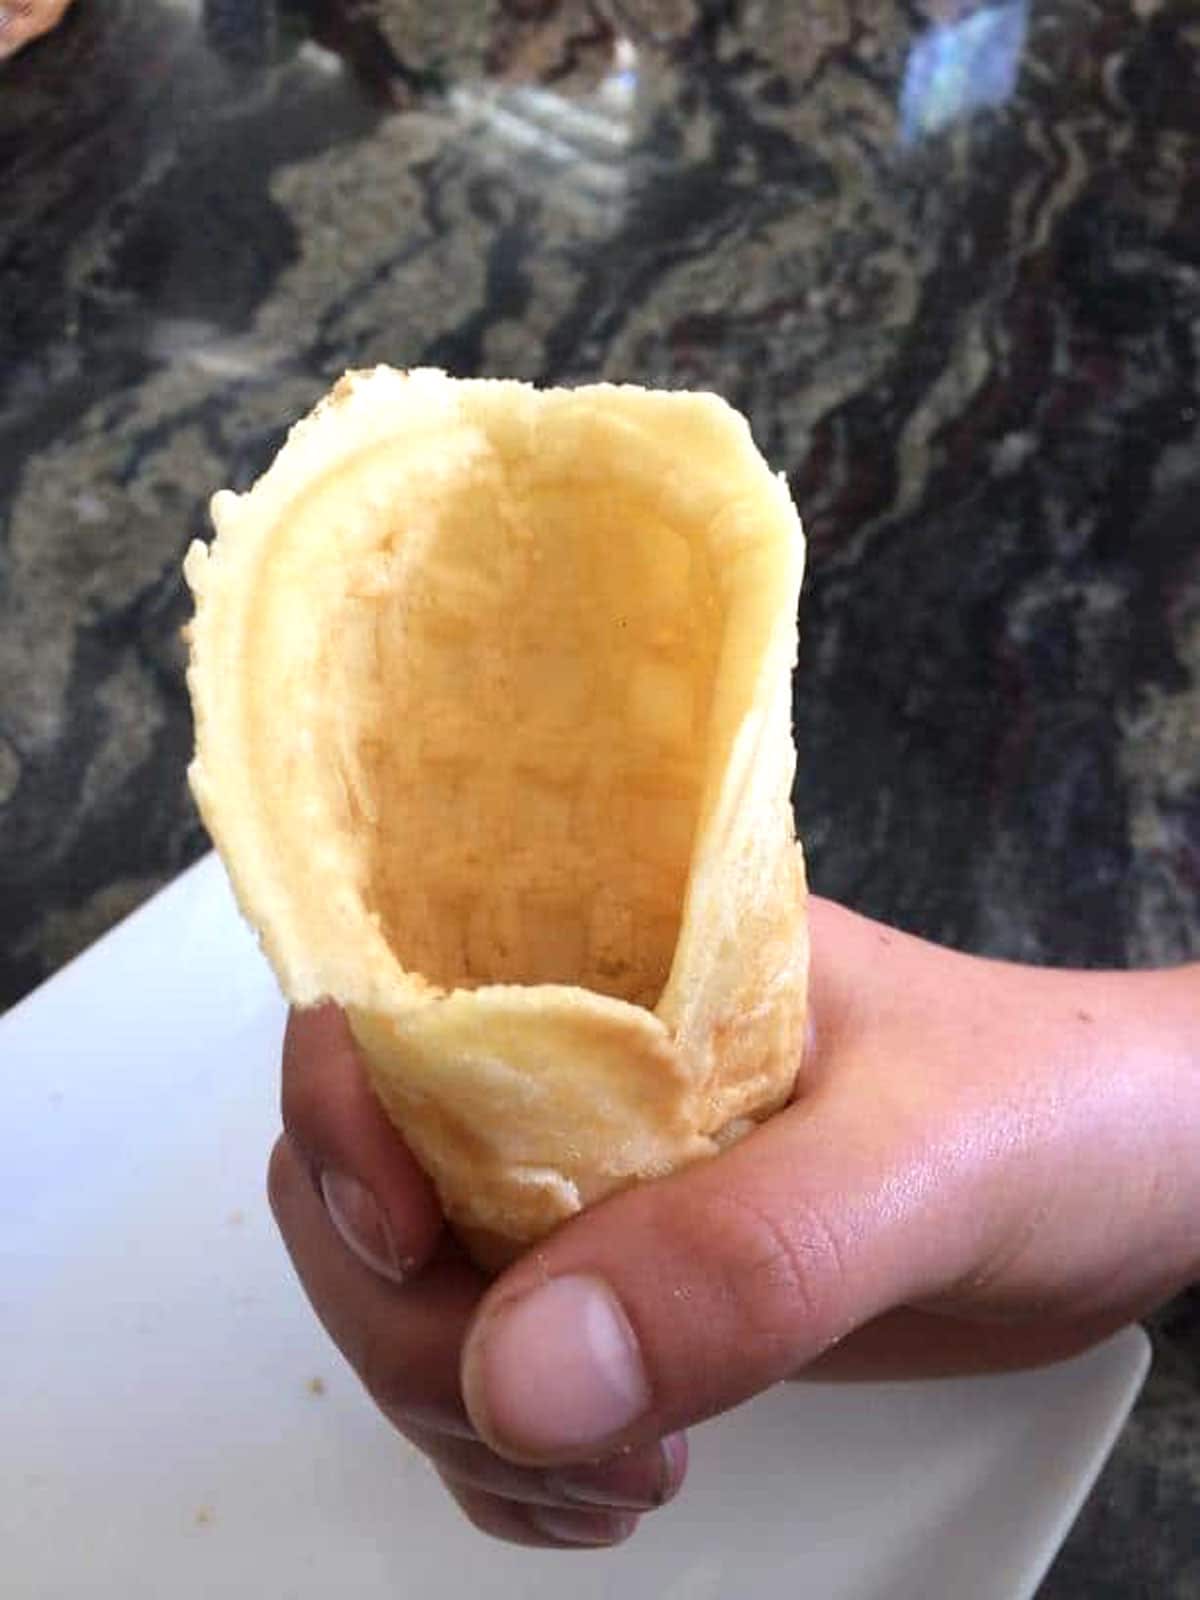 A hand holding a diy gluten free waffle cone.